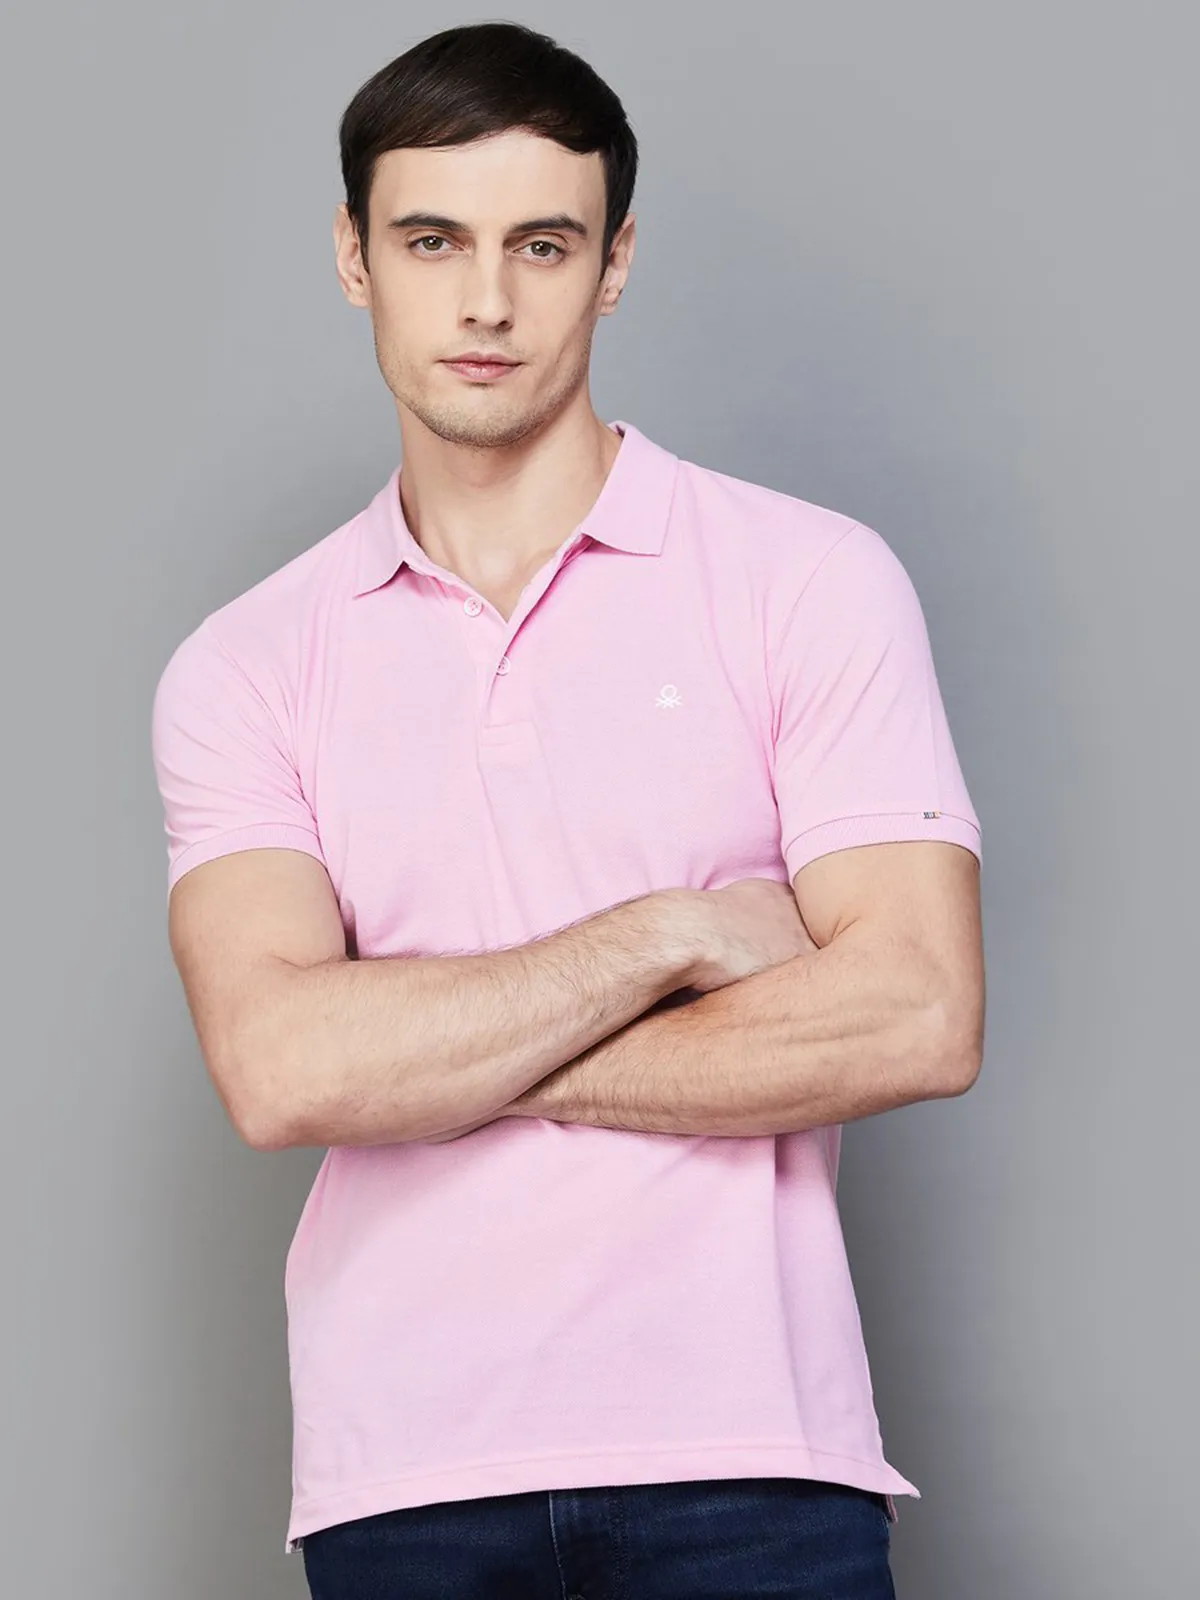 UCB cotton plain pink polo t-shirt